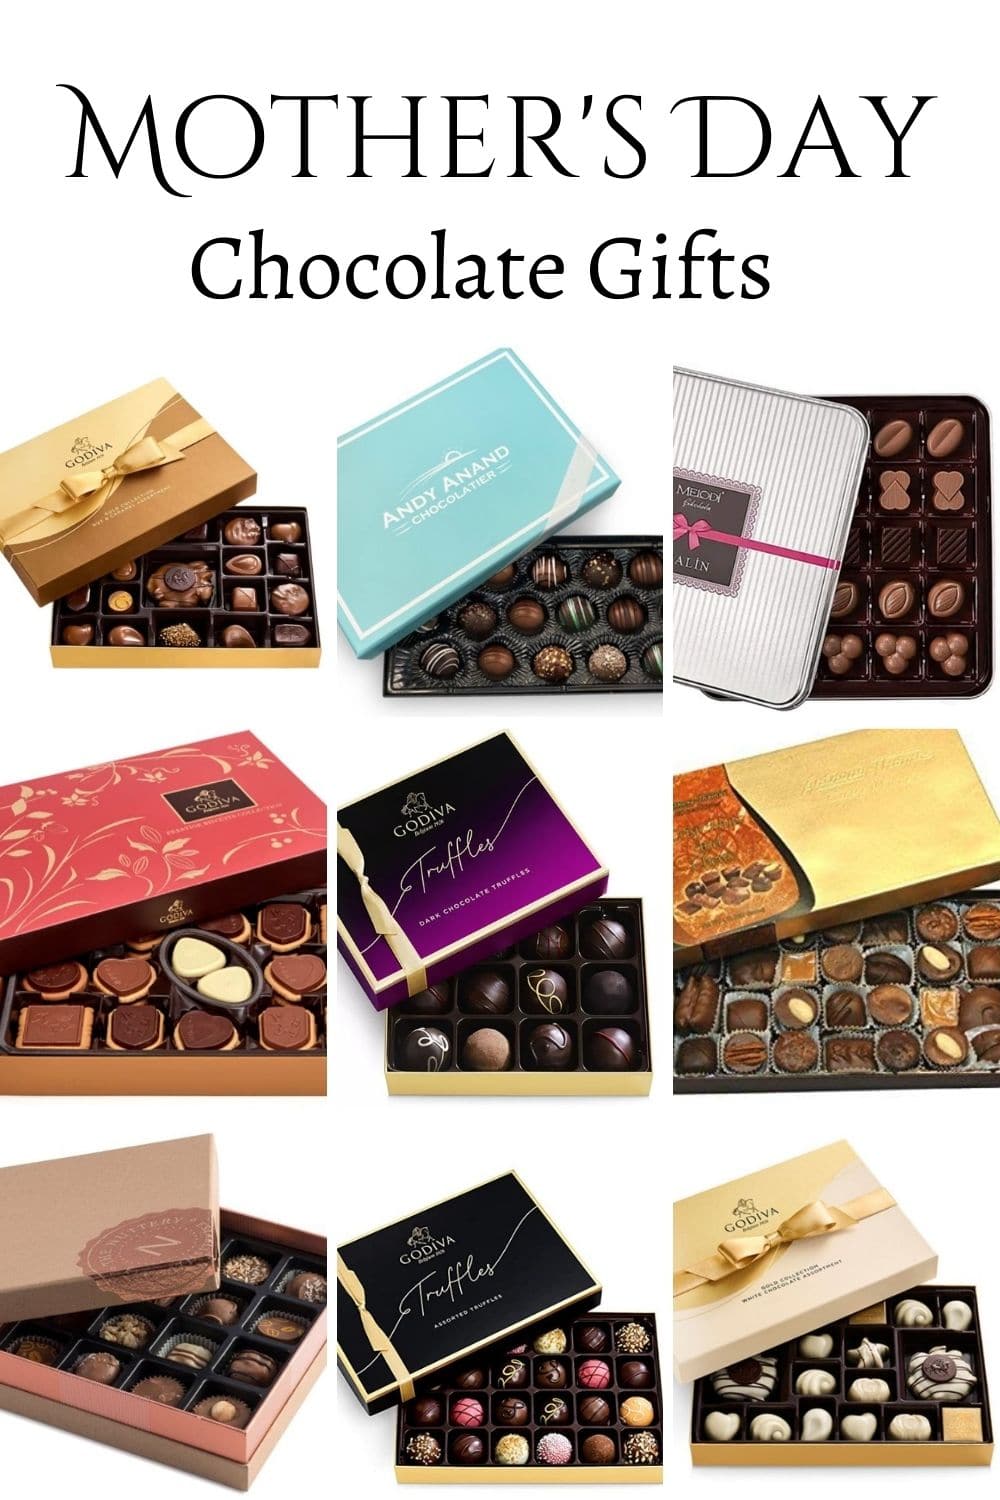 Bridge Mix | Gourmet Chocolates & Gifts by Chocolate Storybook